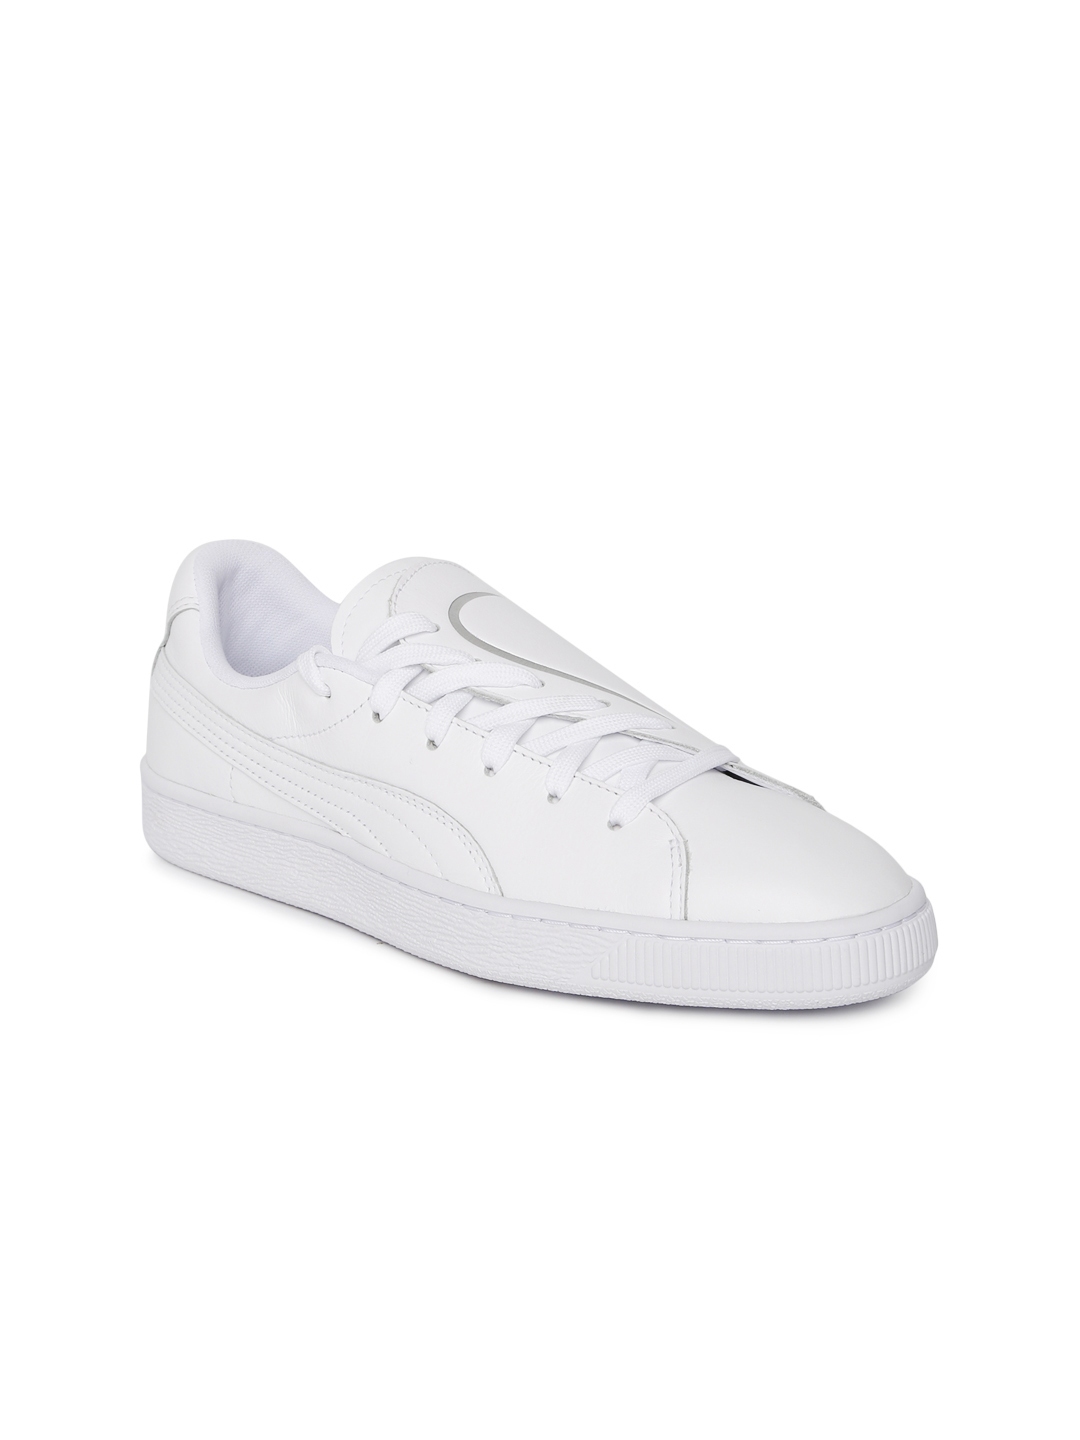 Buy Puma Women White Basket Crush Emboss Leather Sneakers - Casual ...